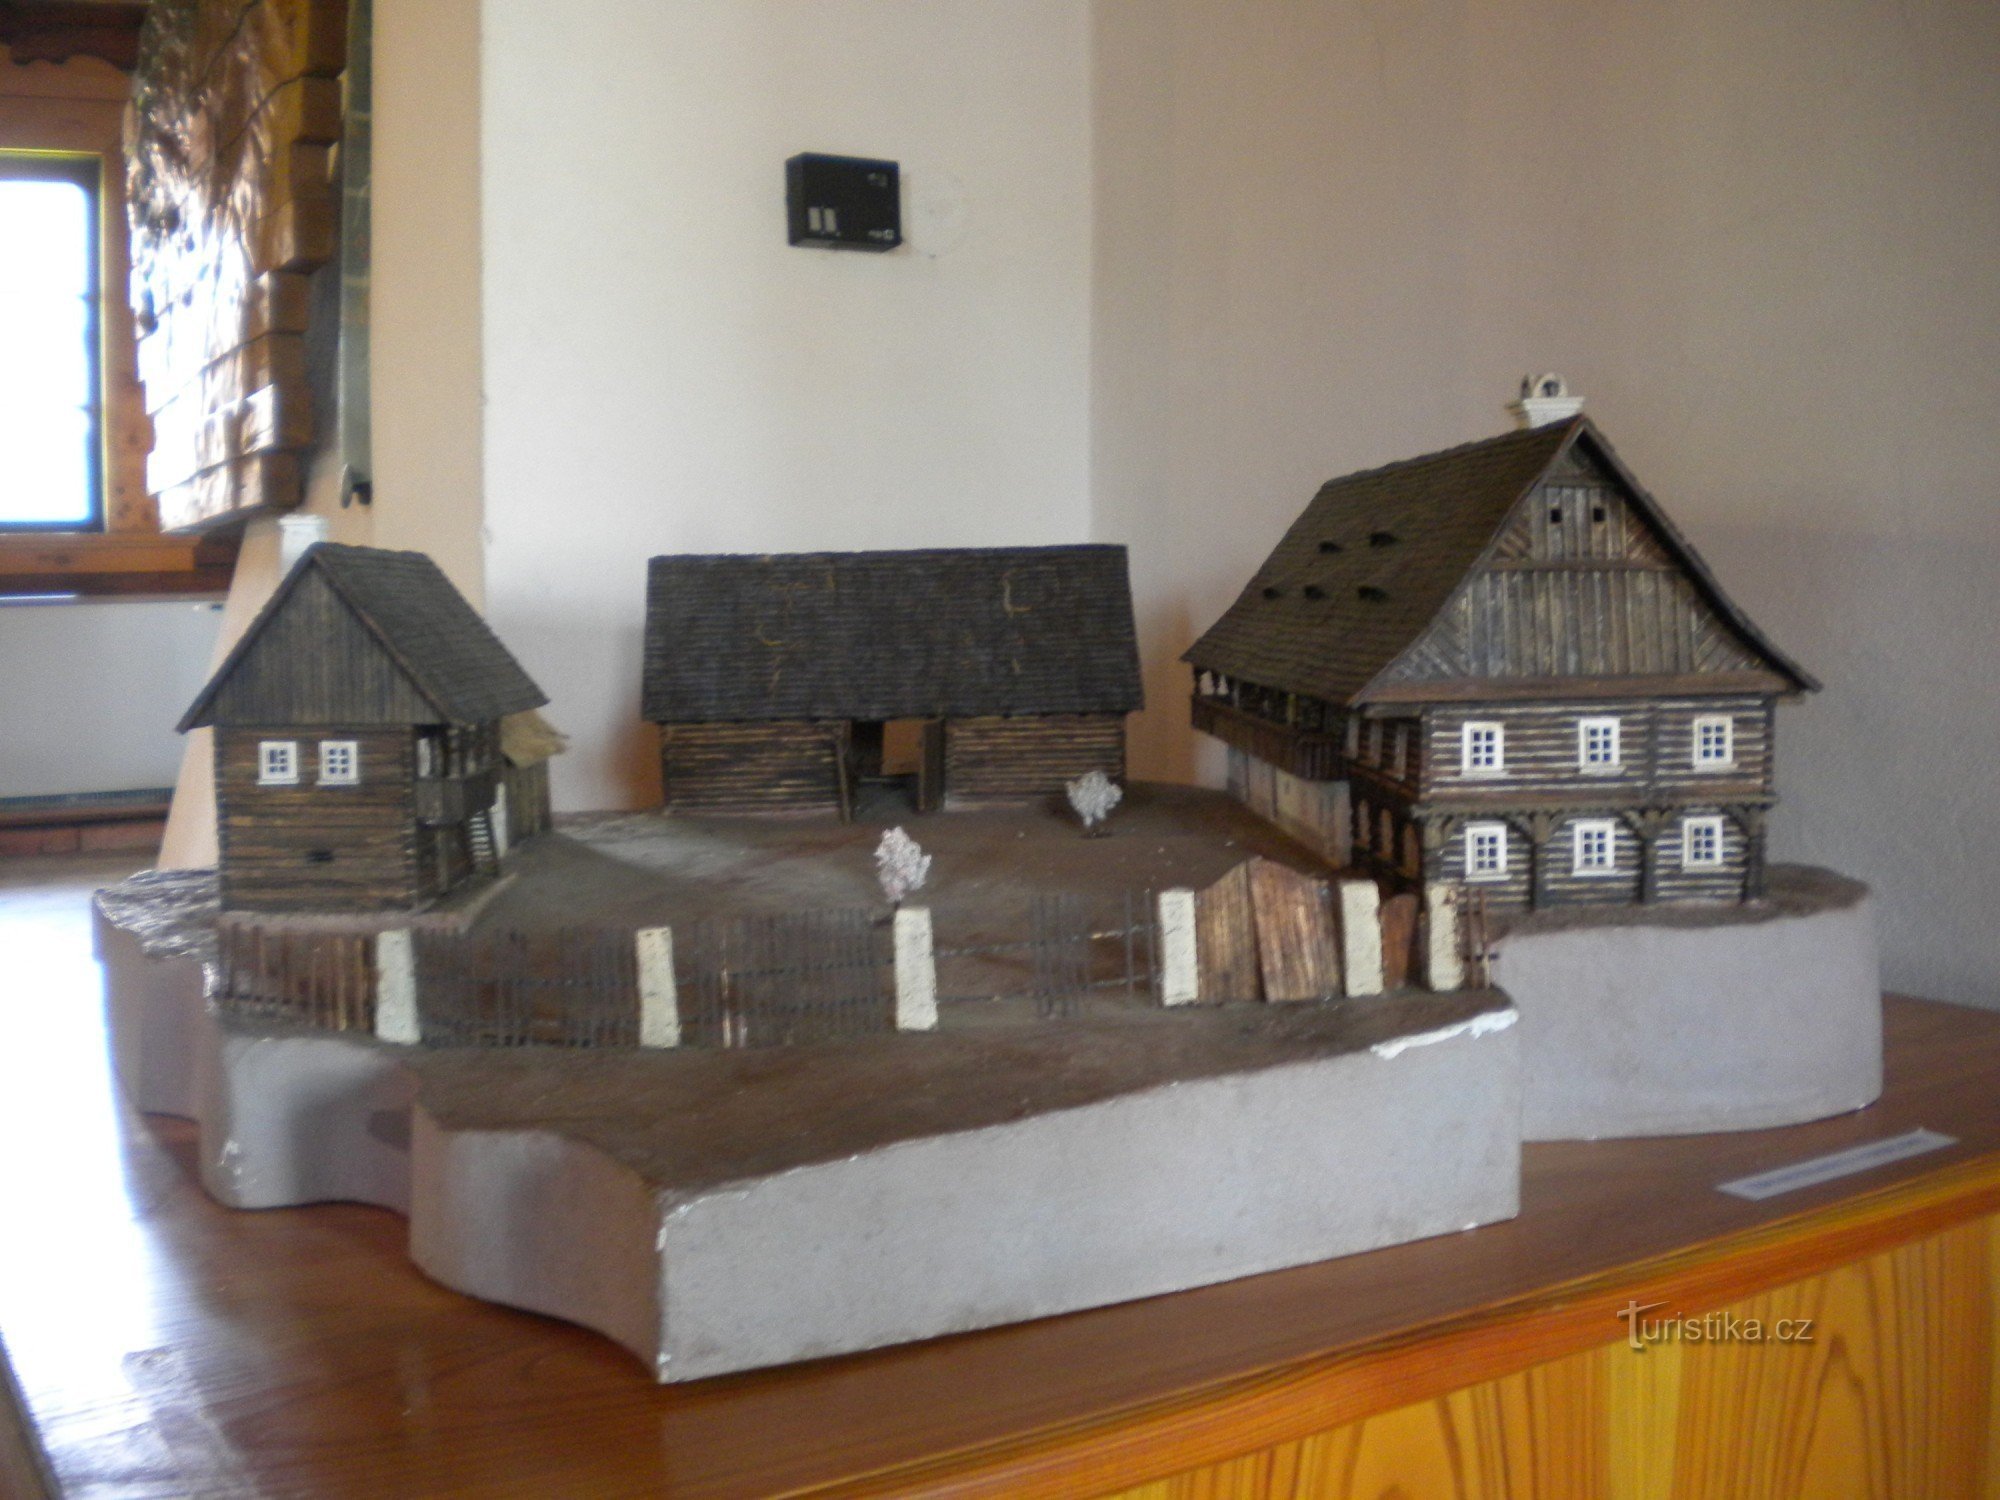 Exhibited models inside the Více rychta.